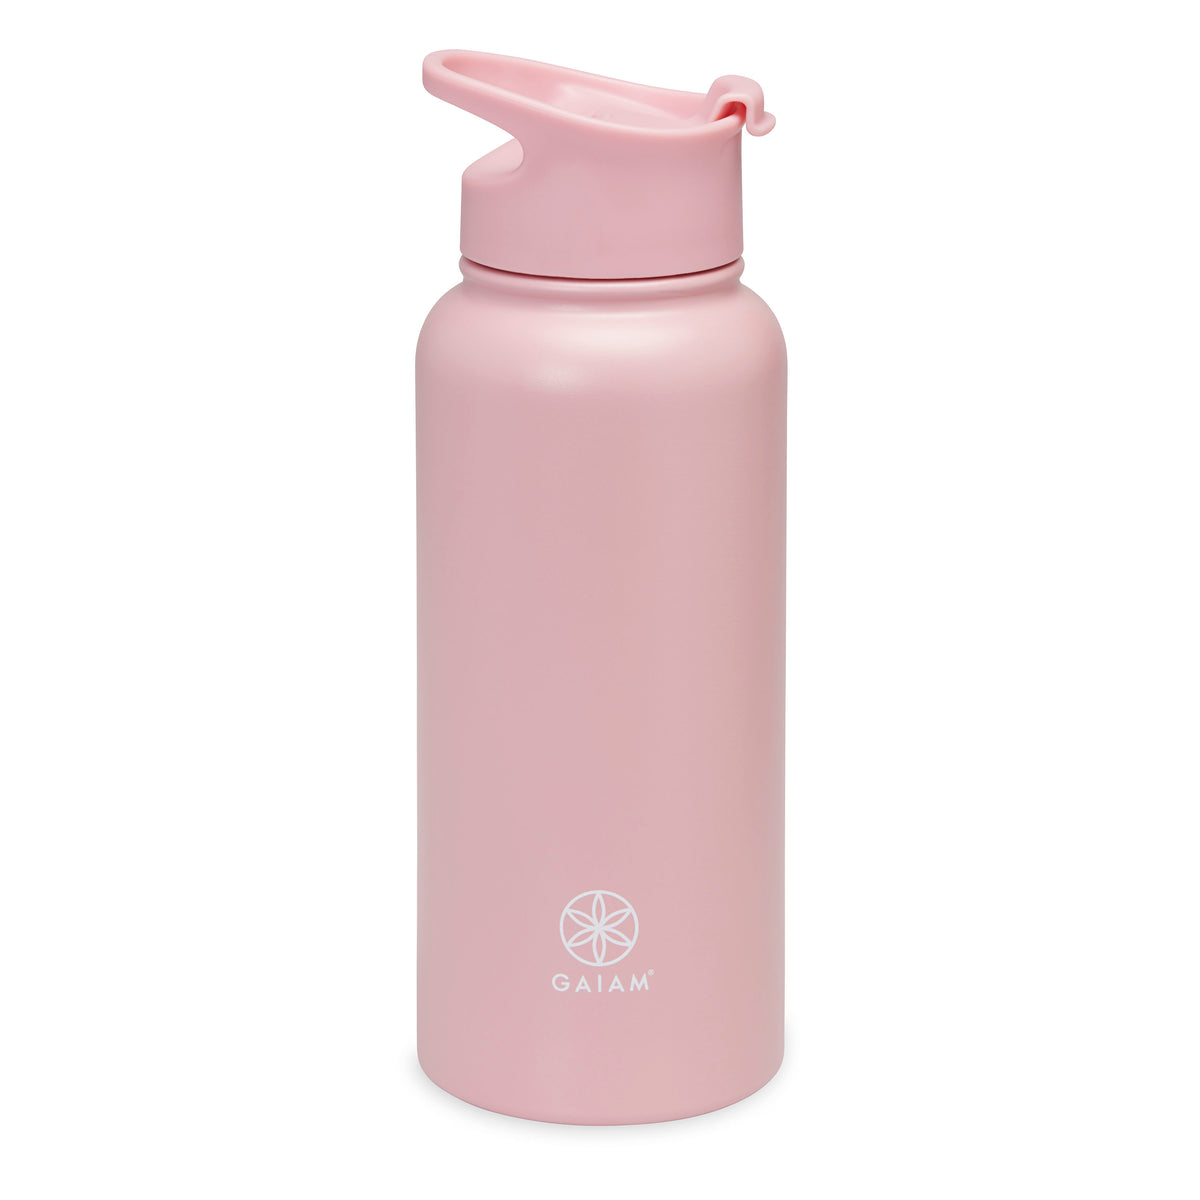 Gaiam 32oz Water Bottle Gift Pack Rosebud with flip top